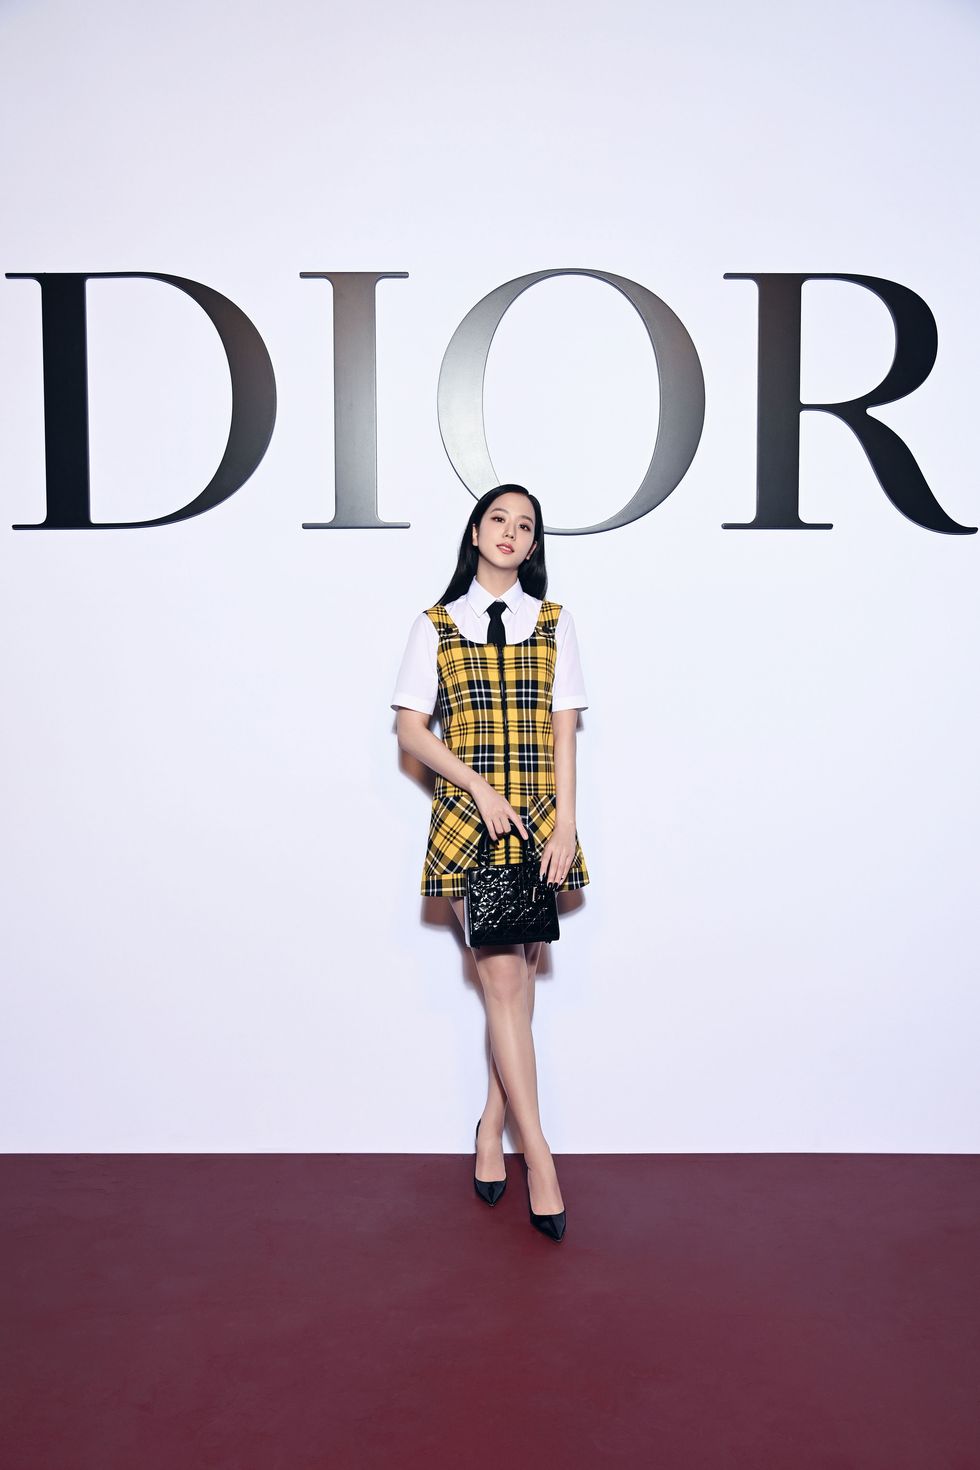 Blackpink's Jisoo Is Dior's New Brand Ambassador